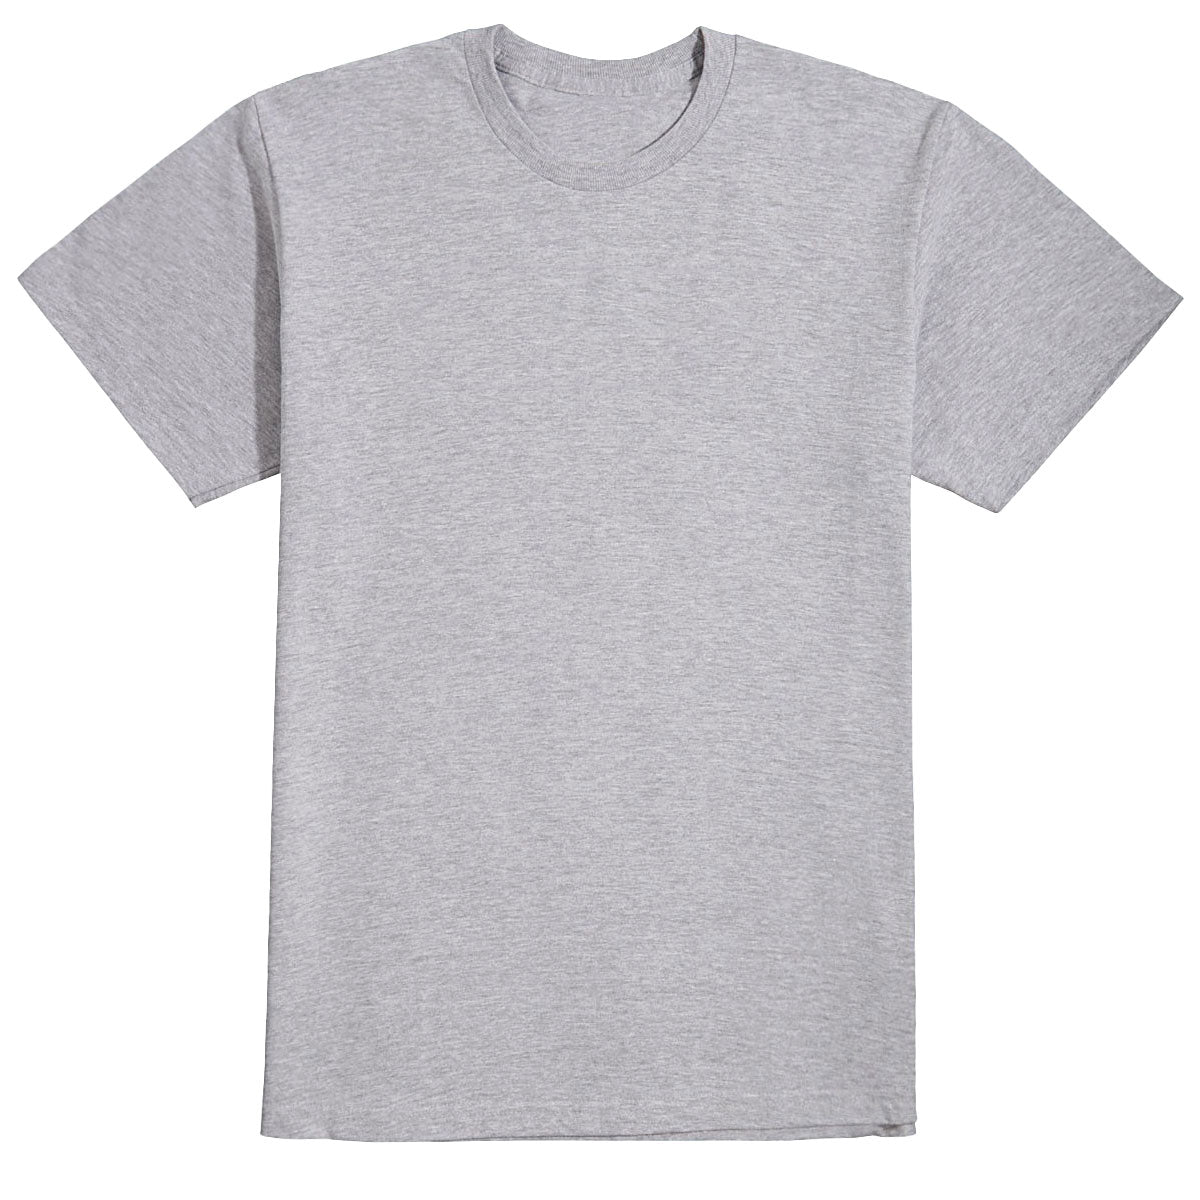 Converse Flash Sheet T-Shirt - Heather Grey - XL image 1